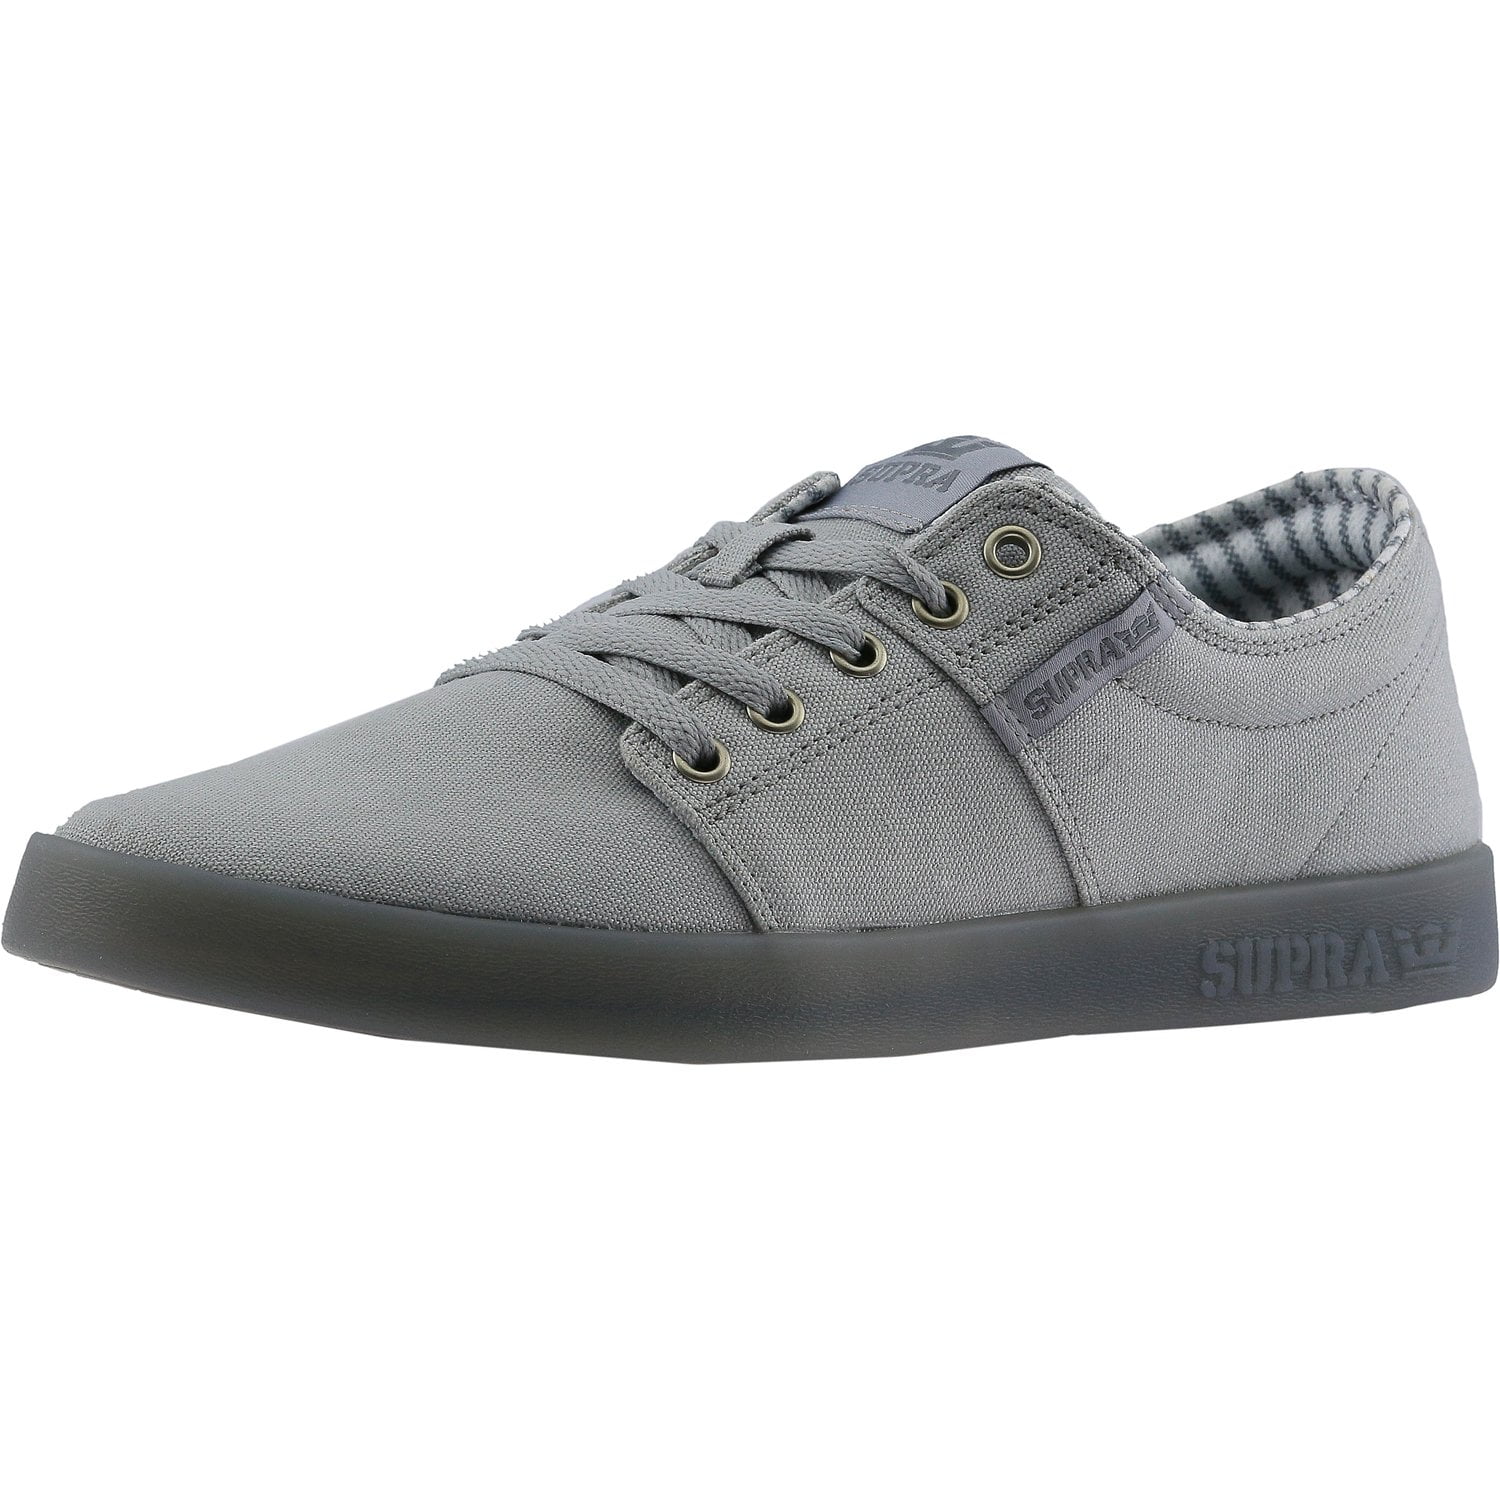 Size 12 M US. Supra Men's Stacks Sneaker Shoe Color Grey Action 